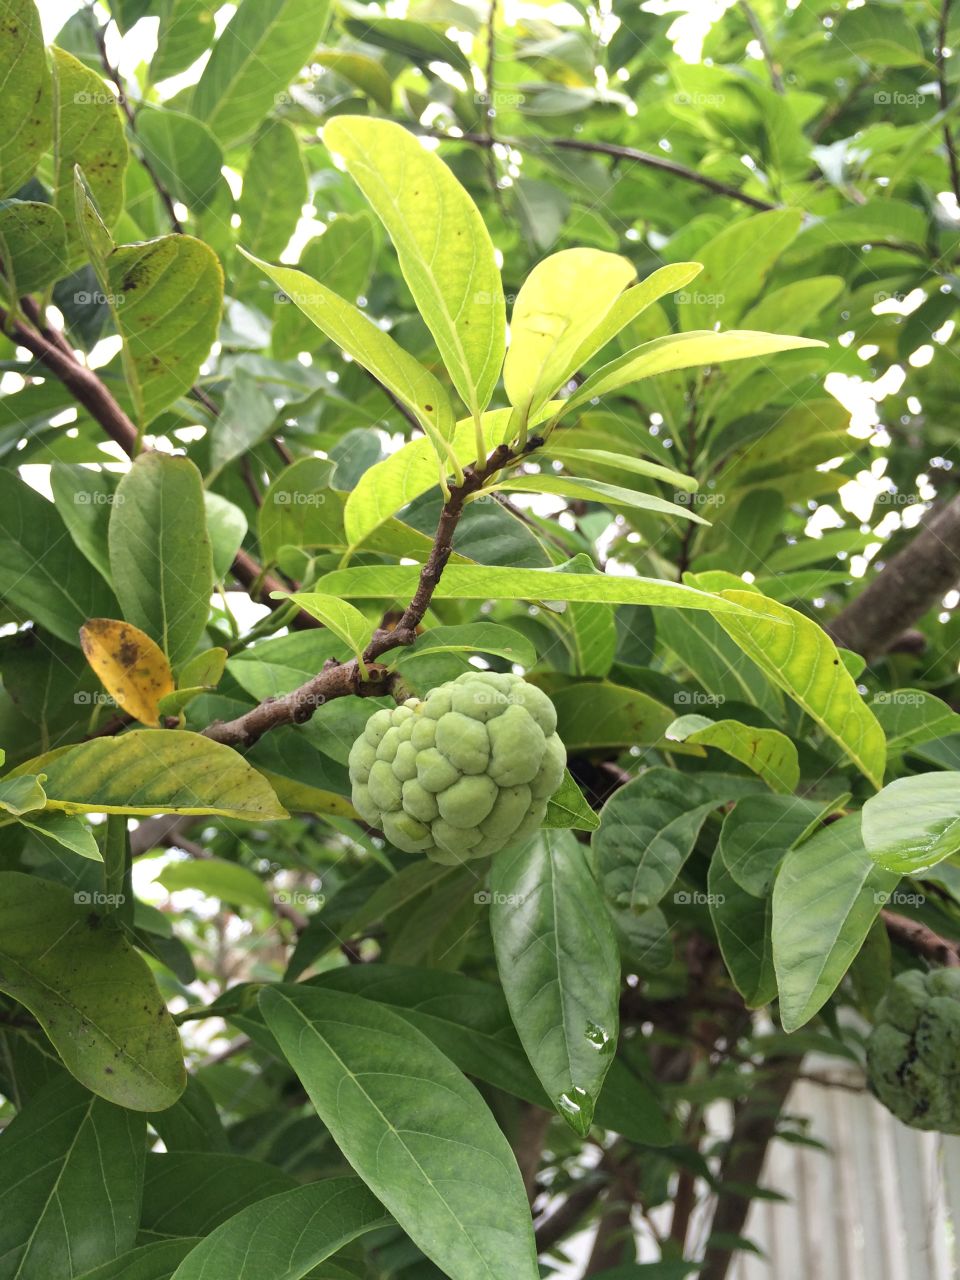 Custard-apple growing on tree